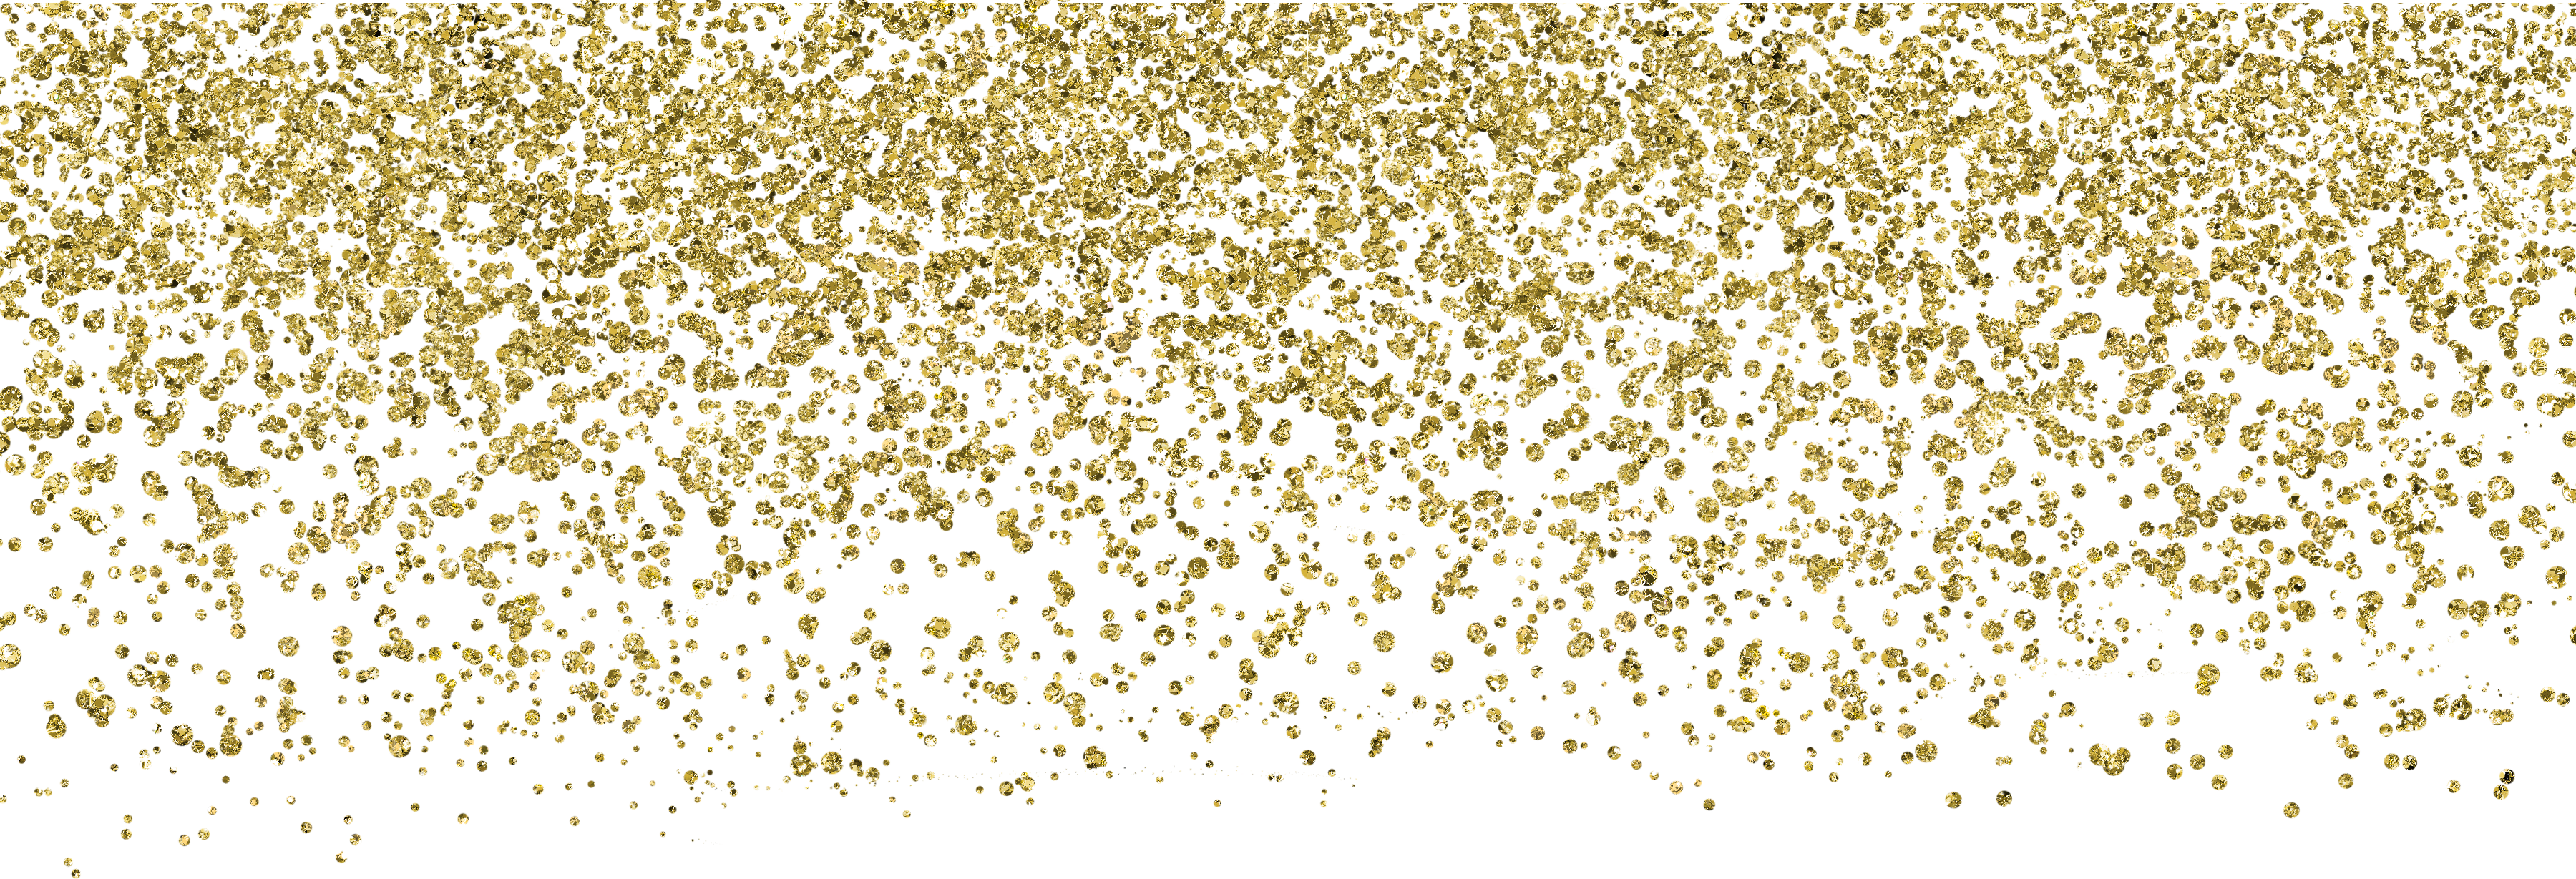 glitter clipart gold sequin